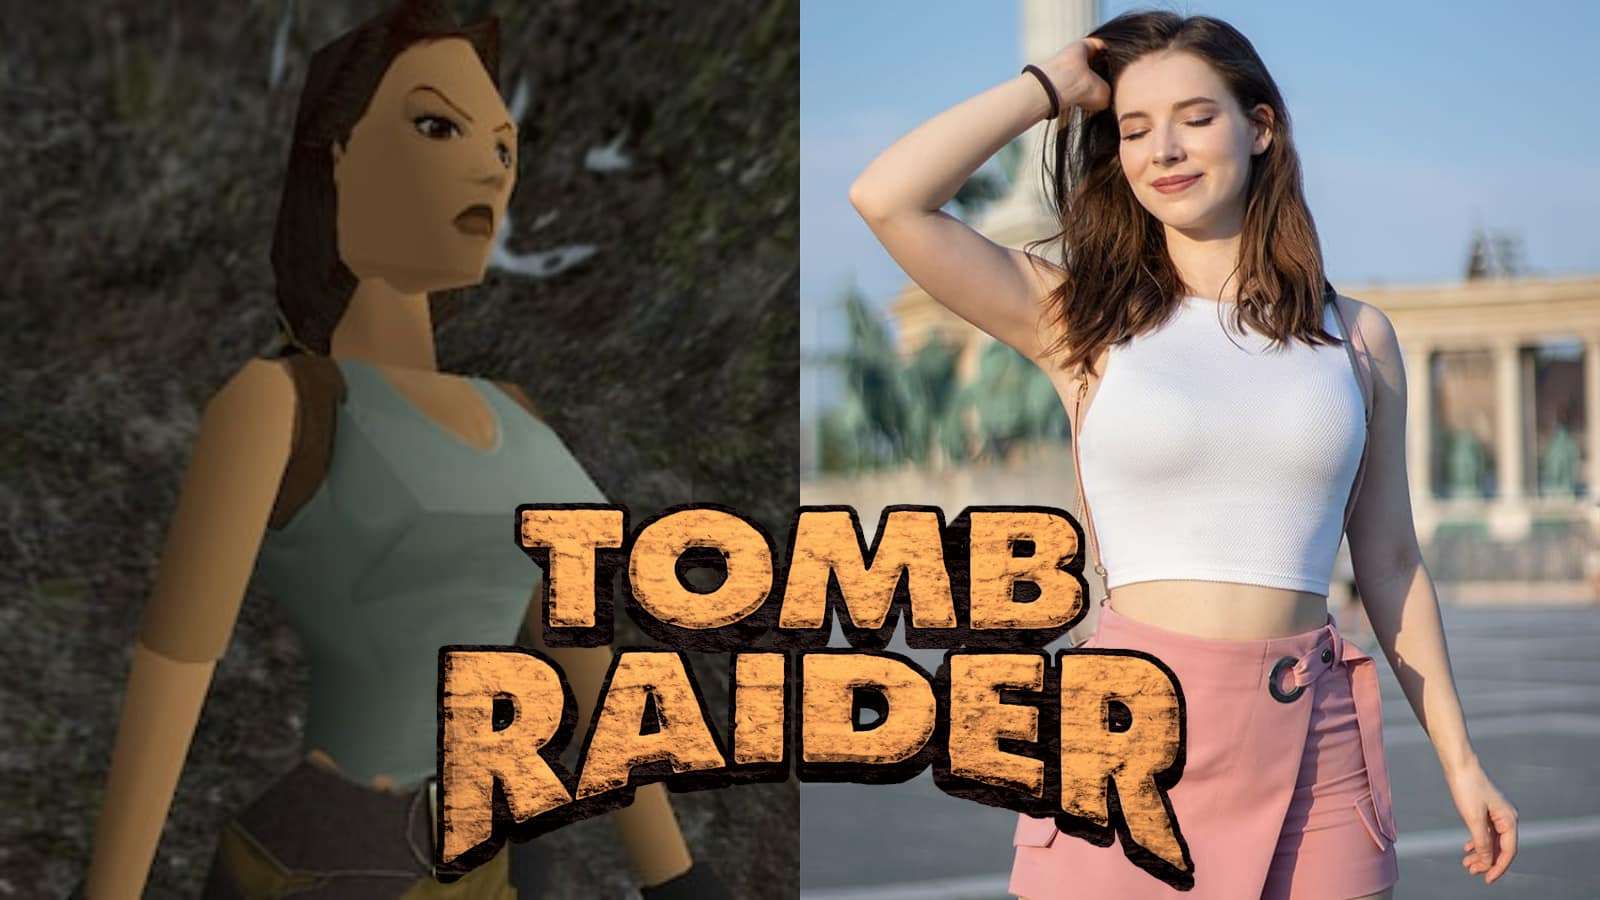 enjinight cosplays as PS One Lara Croft